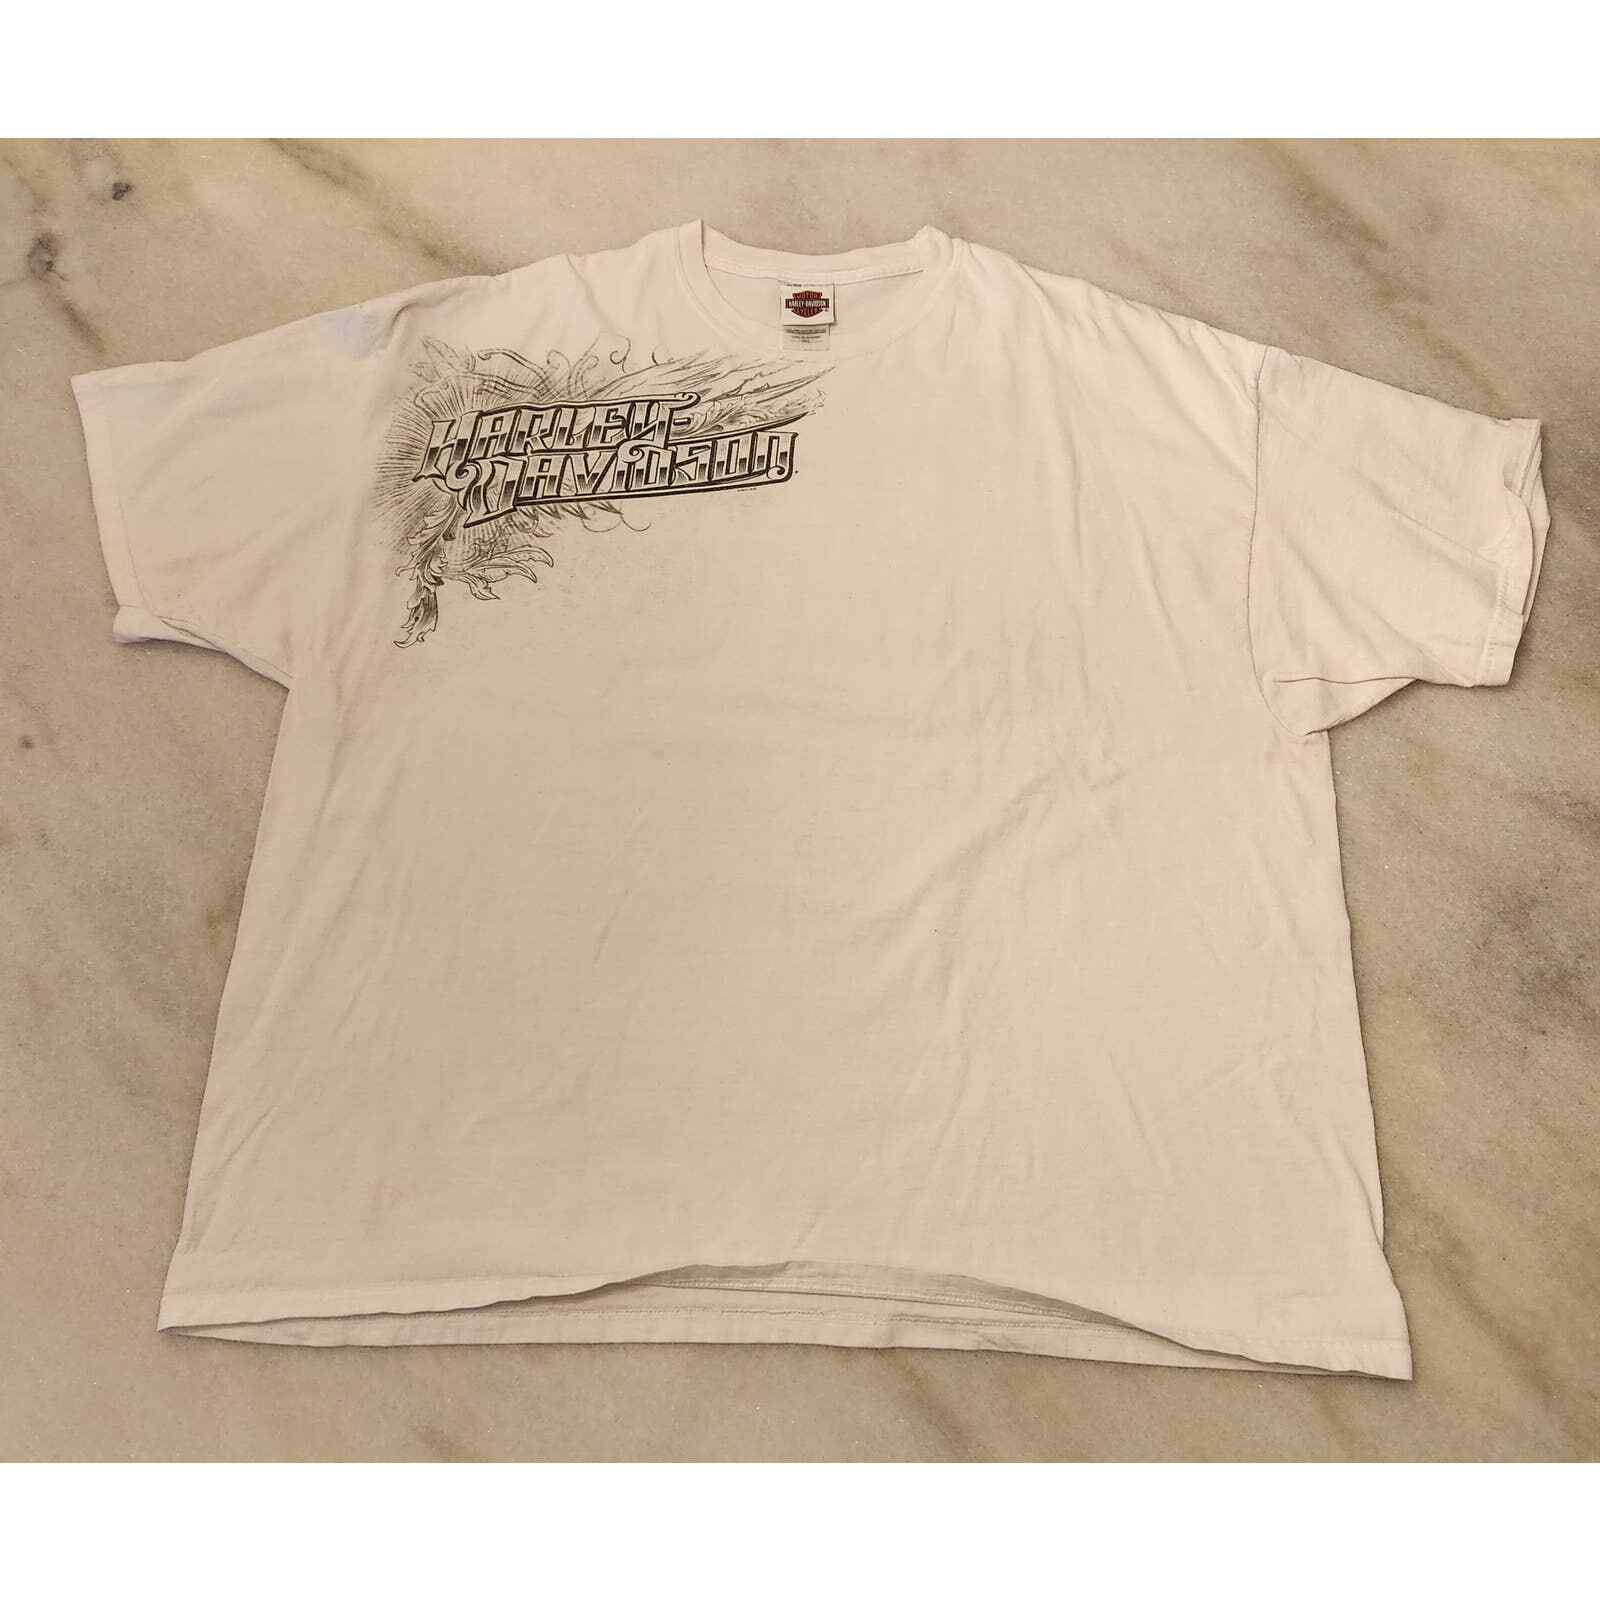 Harley Davidson Men\'s White Cotton Crewneck Las Vegas Graphic T-Shirt Size 3XL